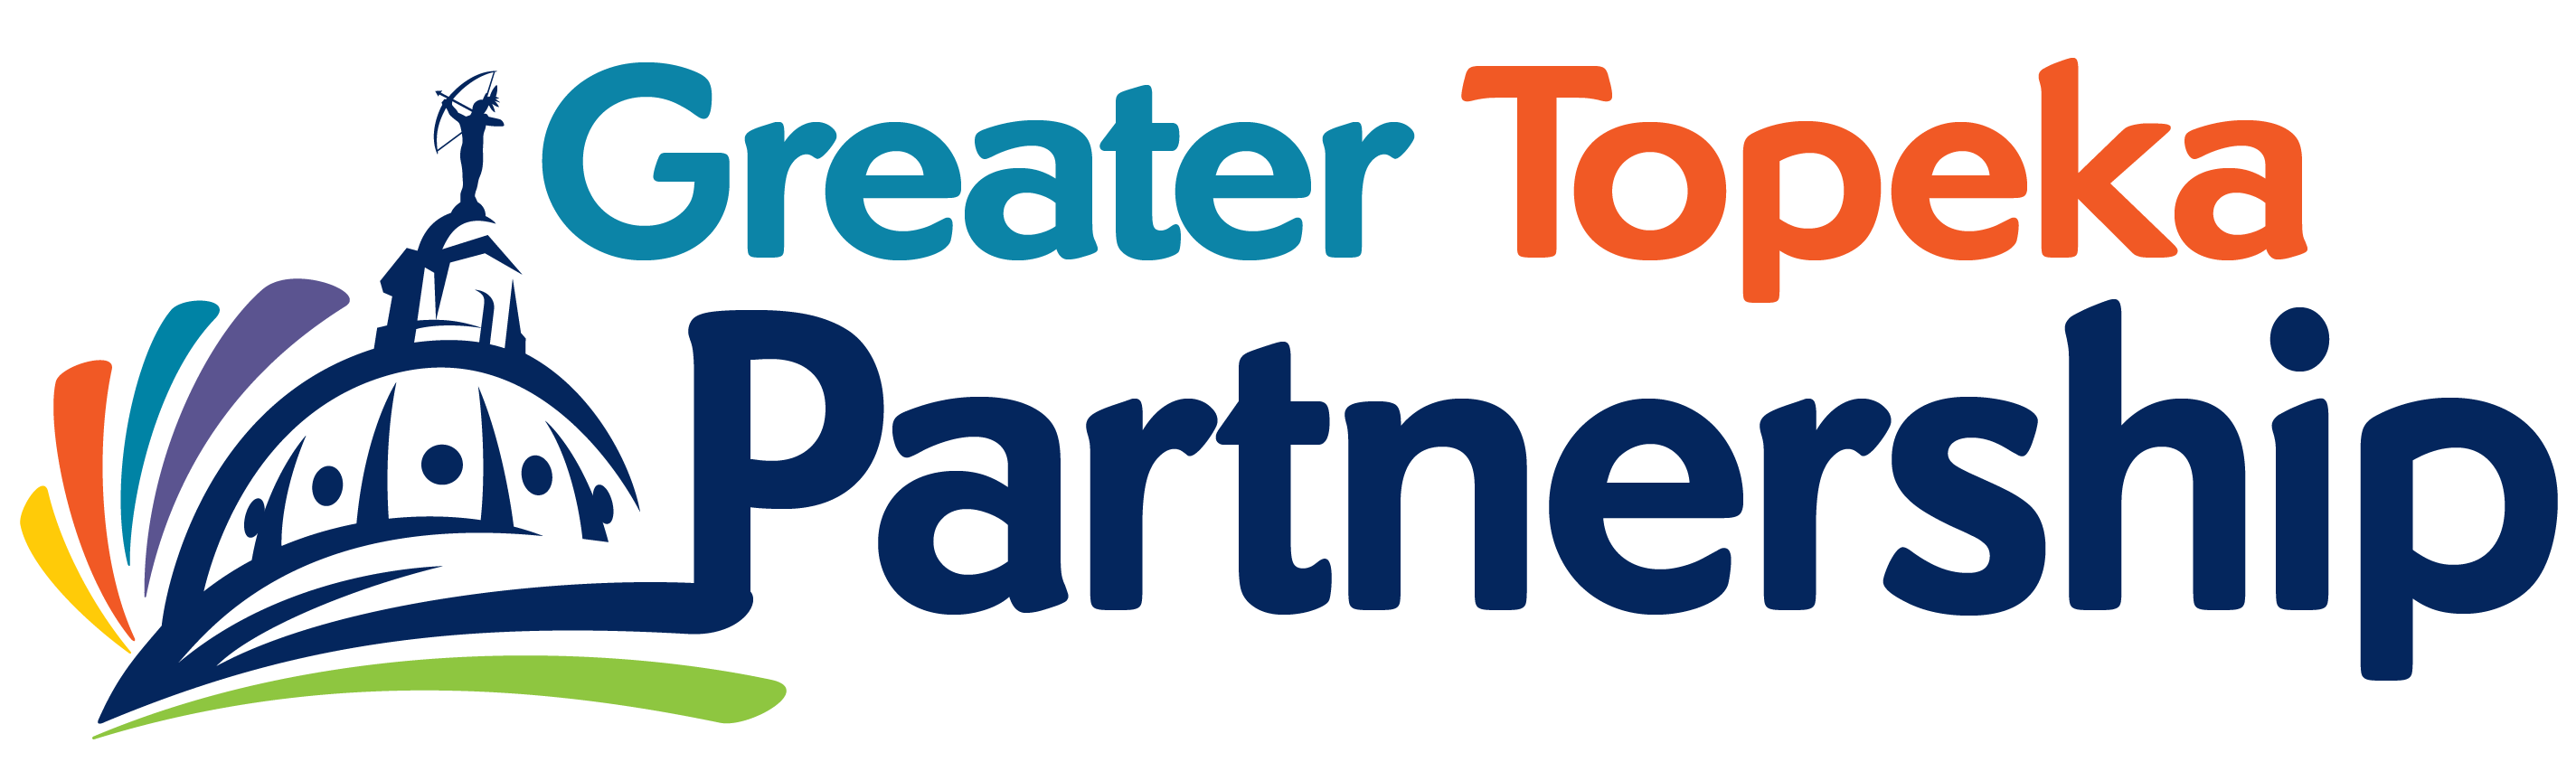 GTP - greater topeka partnership logo 